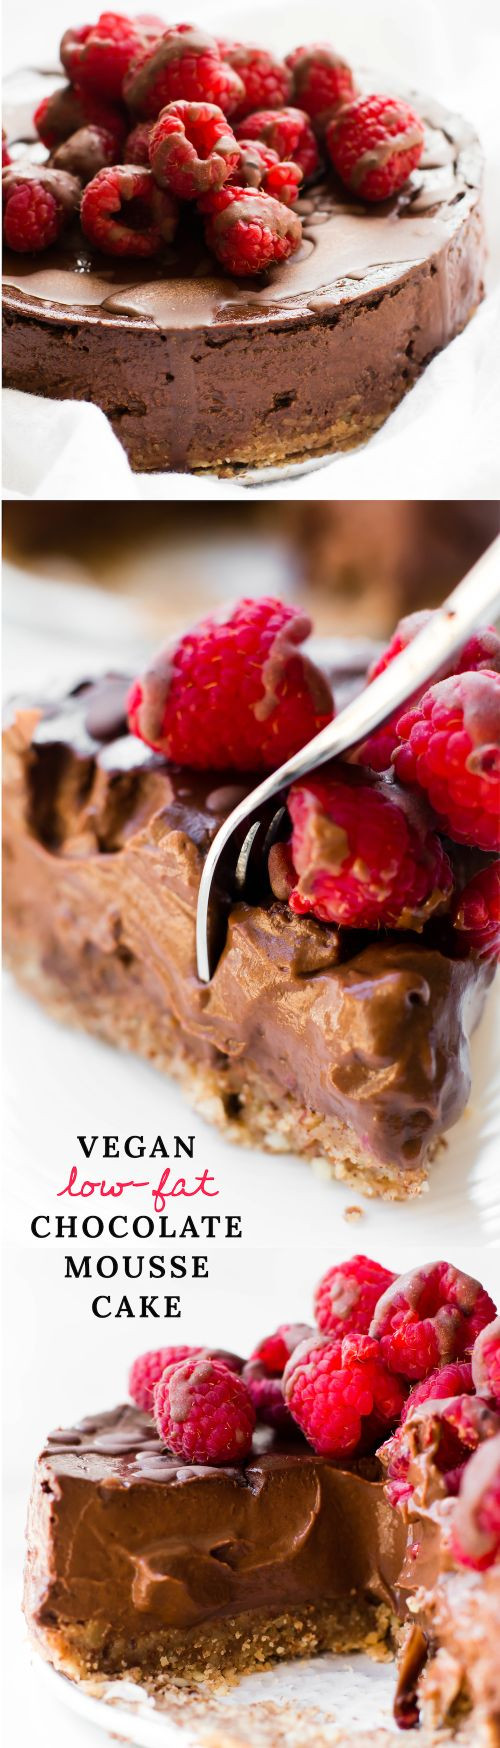 Low Fat Vegan Desserts
 25 best ideas about Vegan chocolate mousse on Pinterest